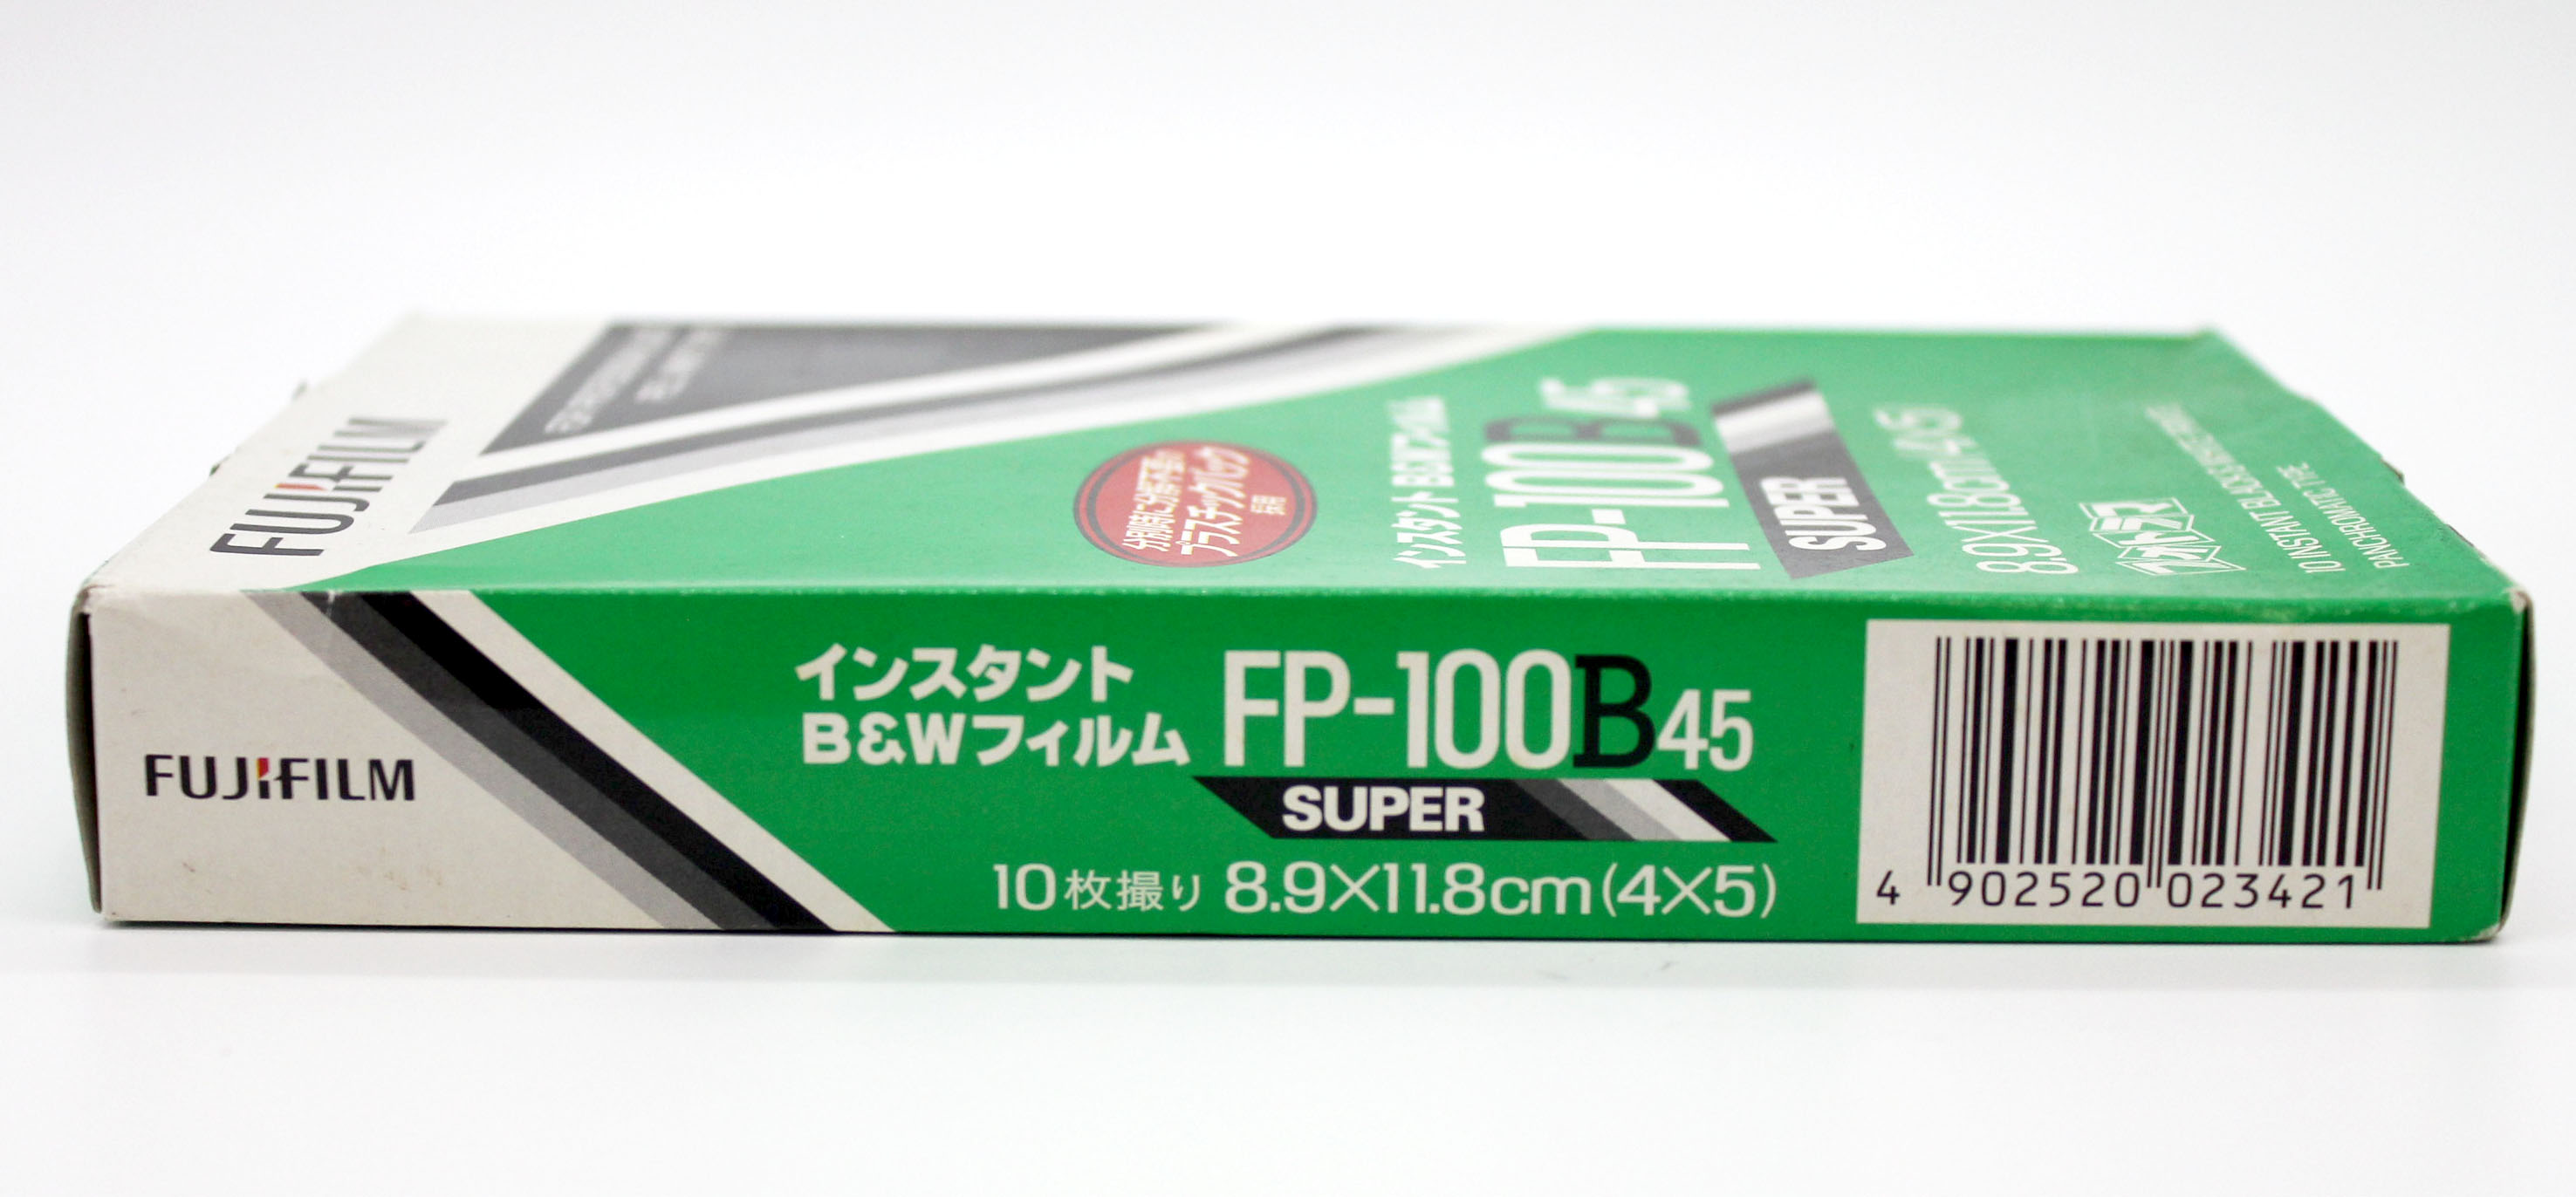  Fuji Fujifilm FP-100B45 4x5 8.9x11.8cm Instant Black & White Film (EXP 6/2011) Photo 3